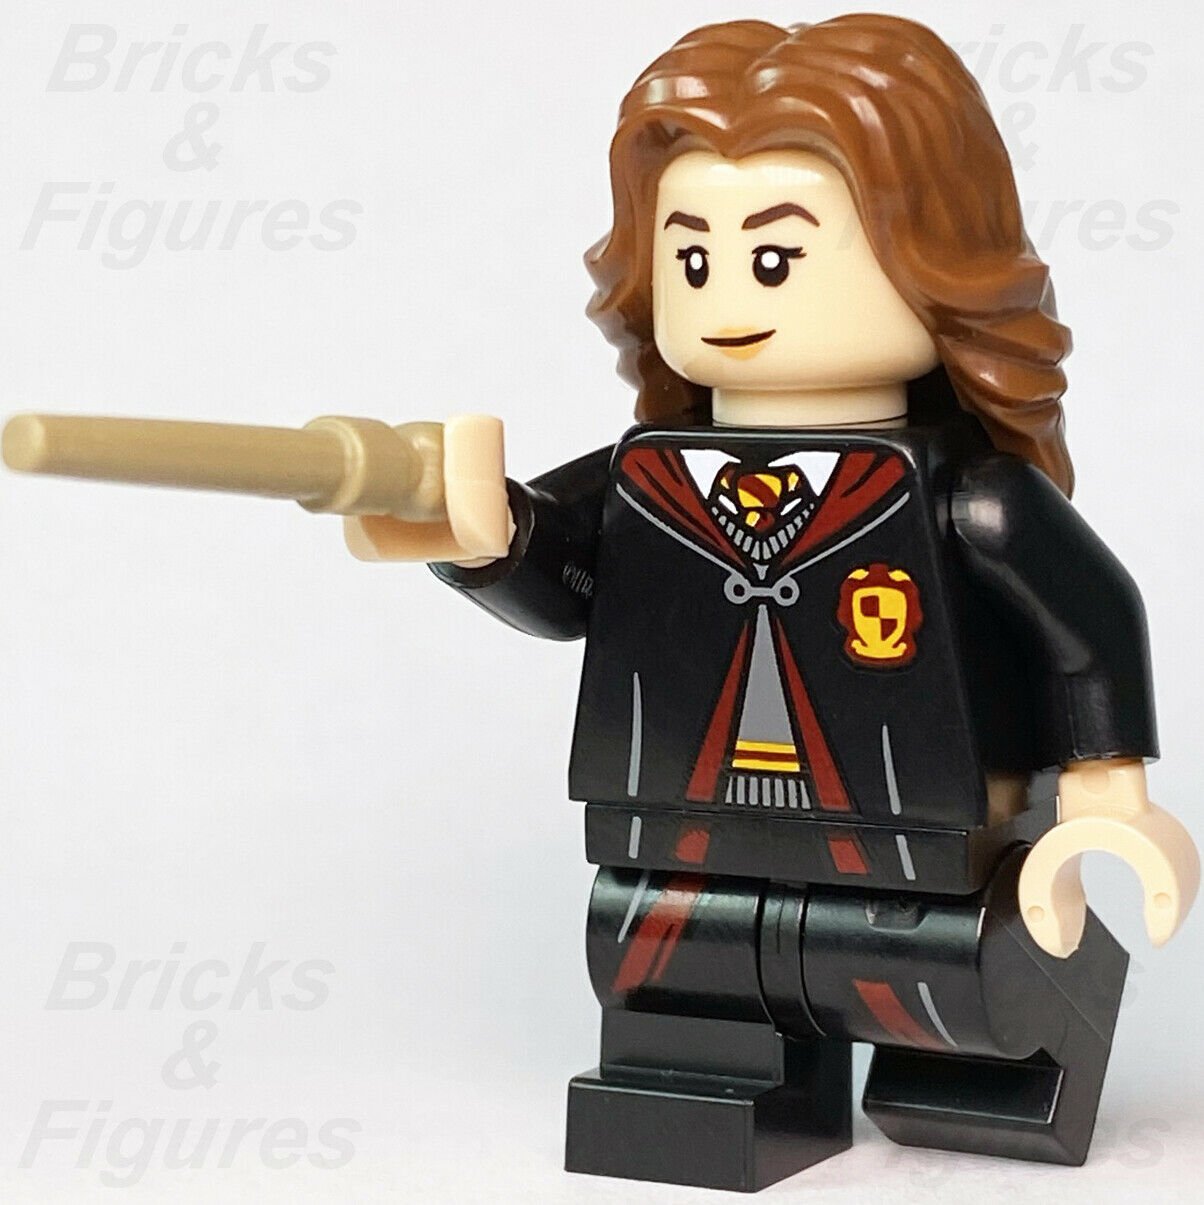 Harry Potter LEGO Hermione Granger Series 1 Gryffindor Witch Minifigure 71022 - Bricks & Figures